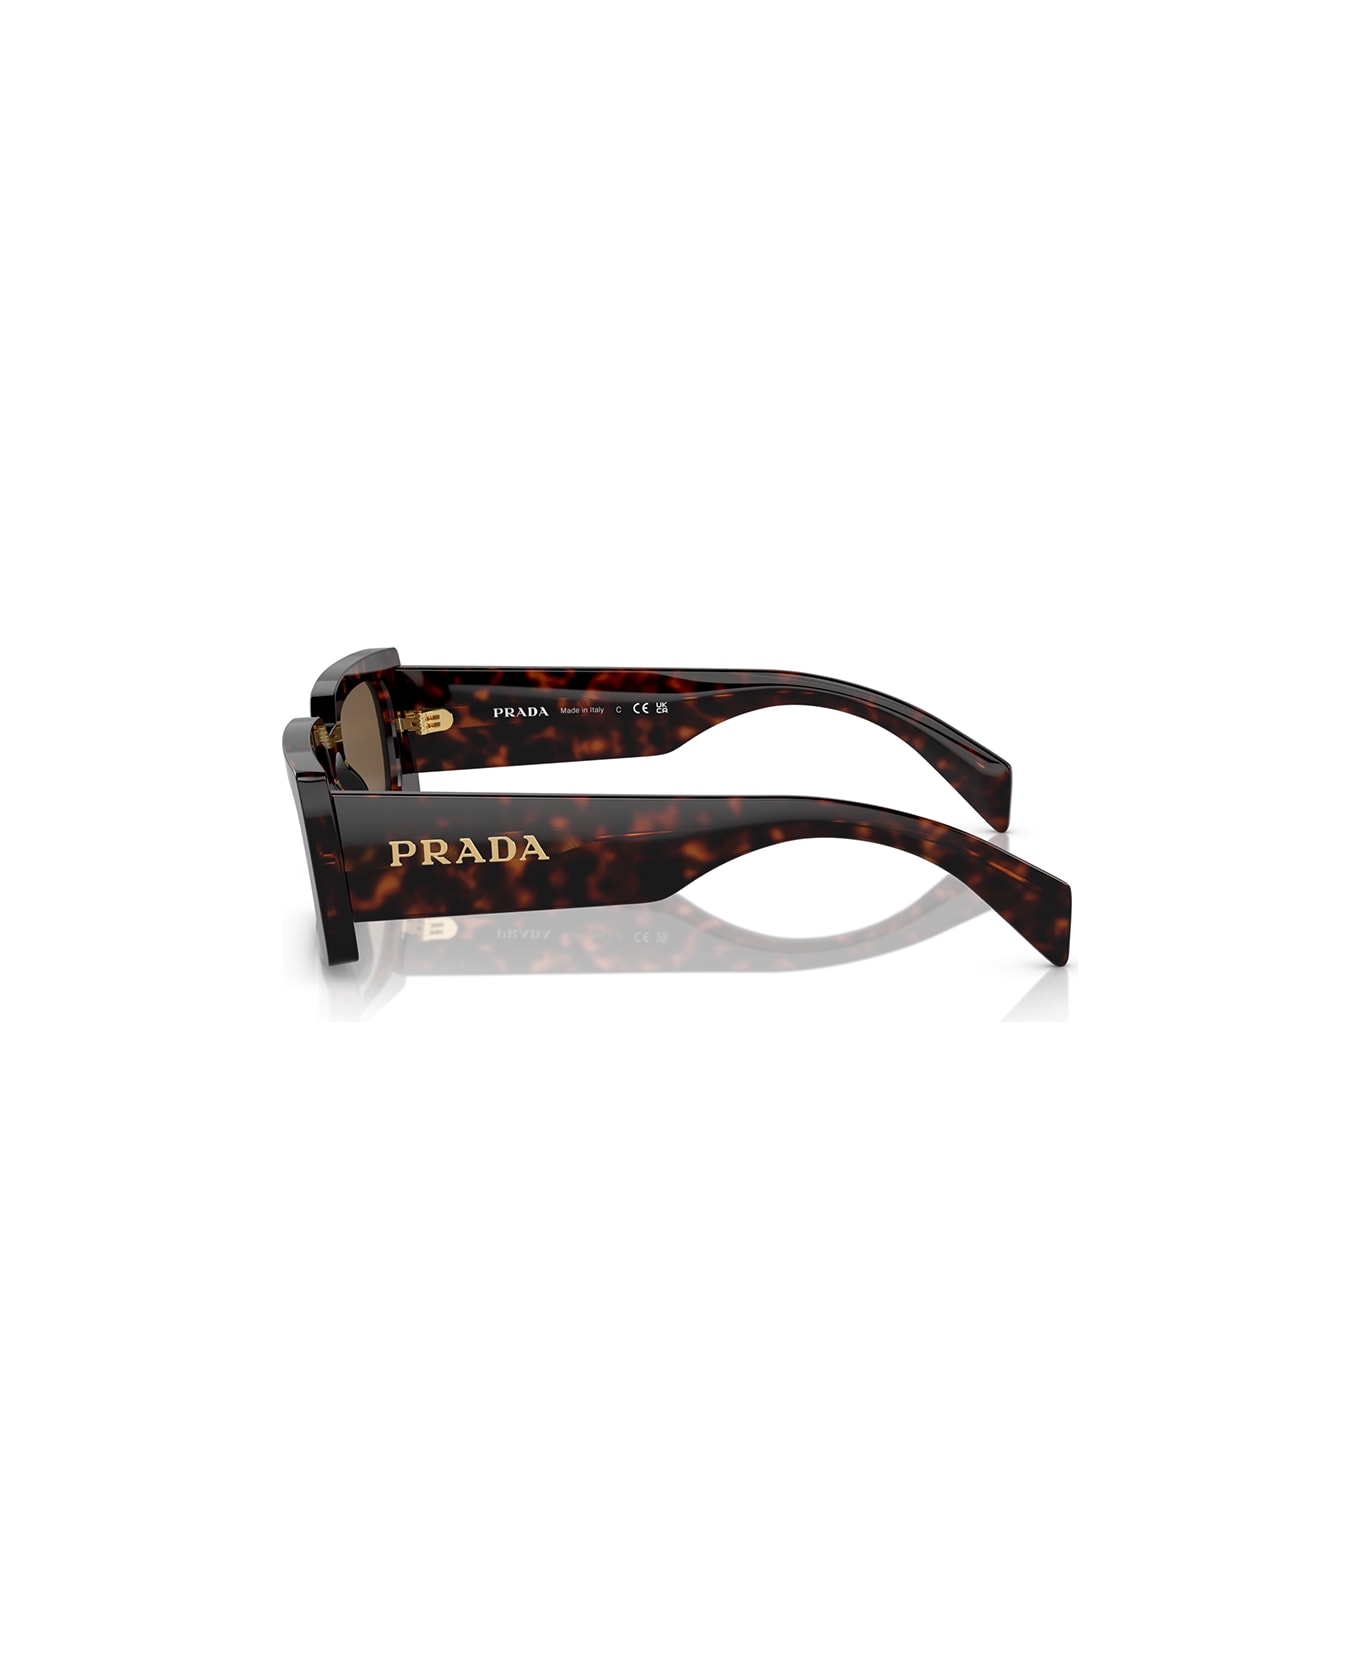 Prada Eyewear Sunglasses - Havana/Marrone